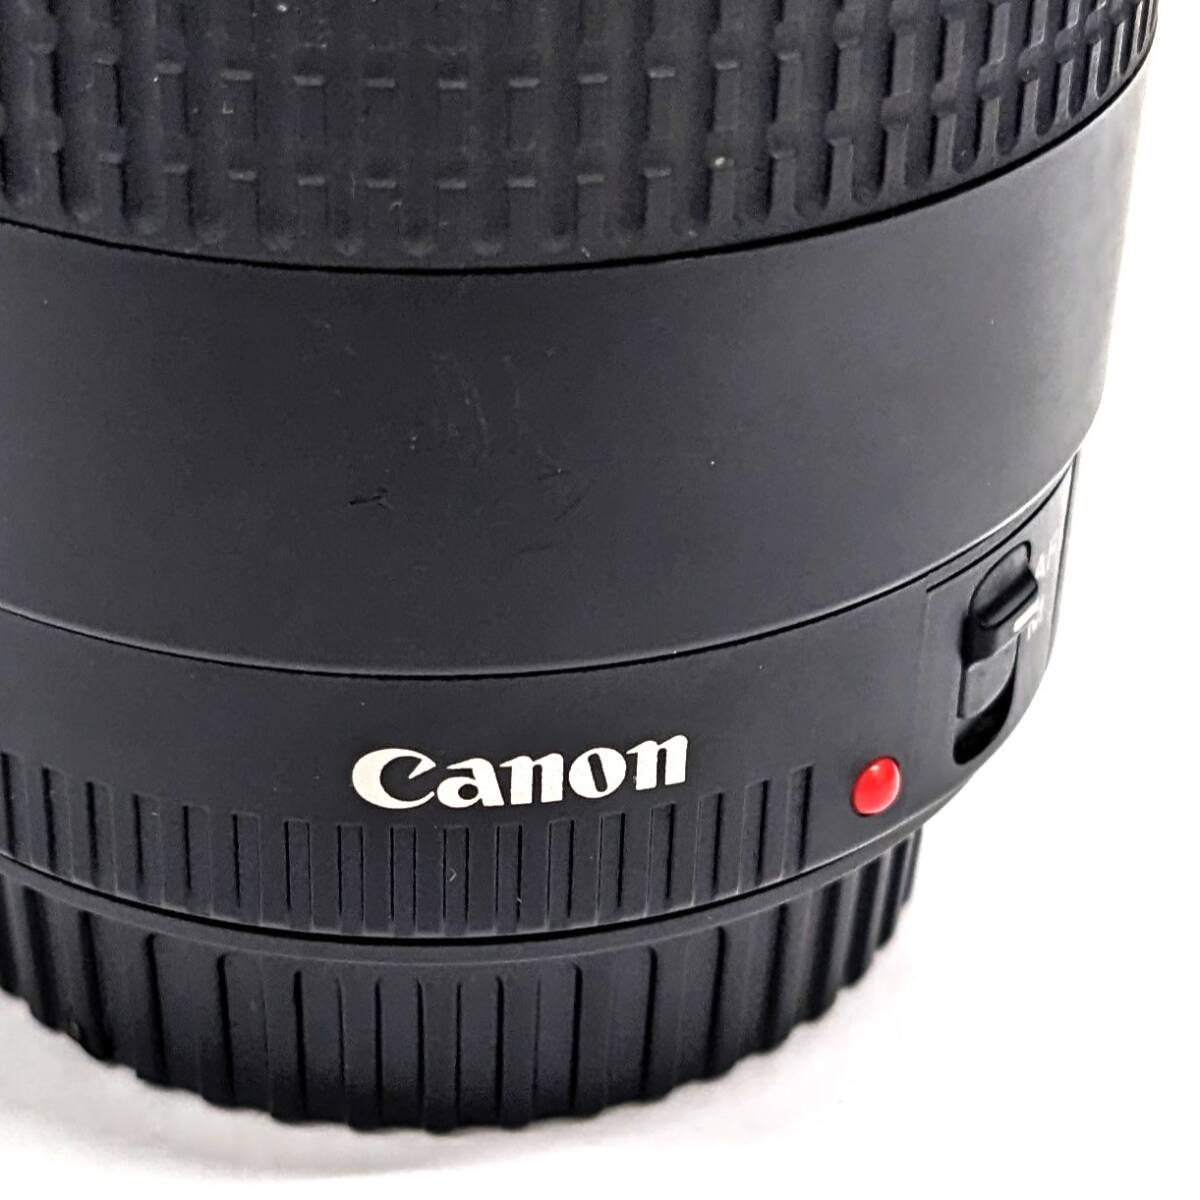 【833】CANON キャノン ZOOM LENS EF ズーム レンズ 75-300mm 1:4-5.6 Ⅱ Φ58mm カメラ用品 一眼 撮影器具 撮影道具 家電 趣味用品の画像9